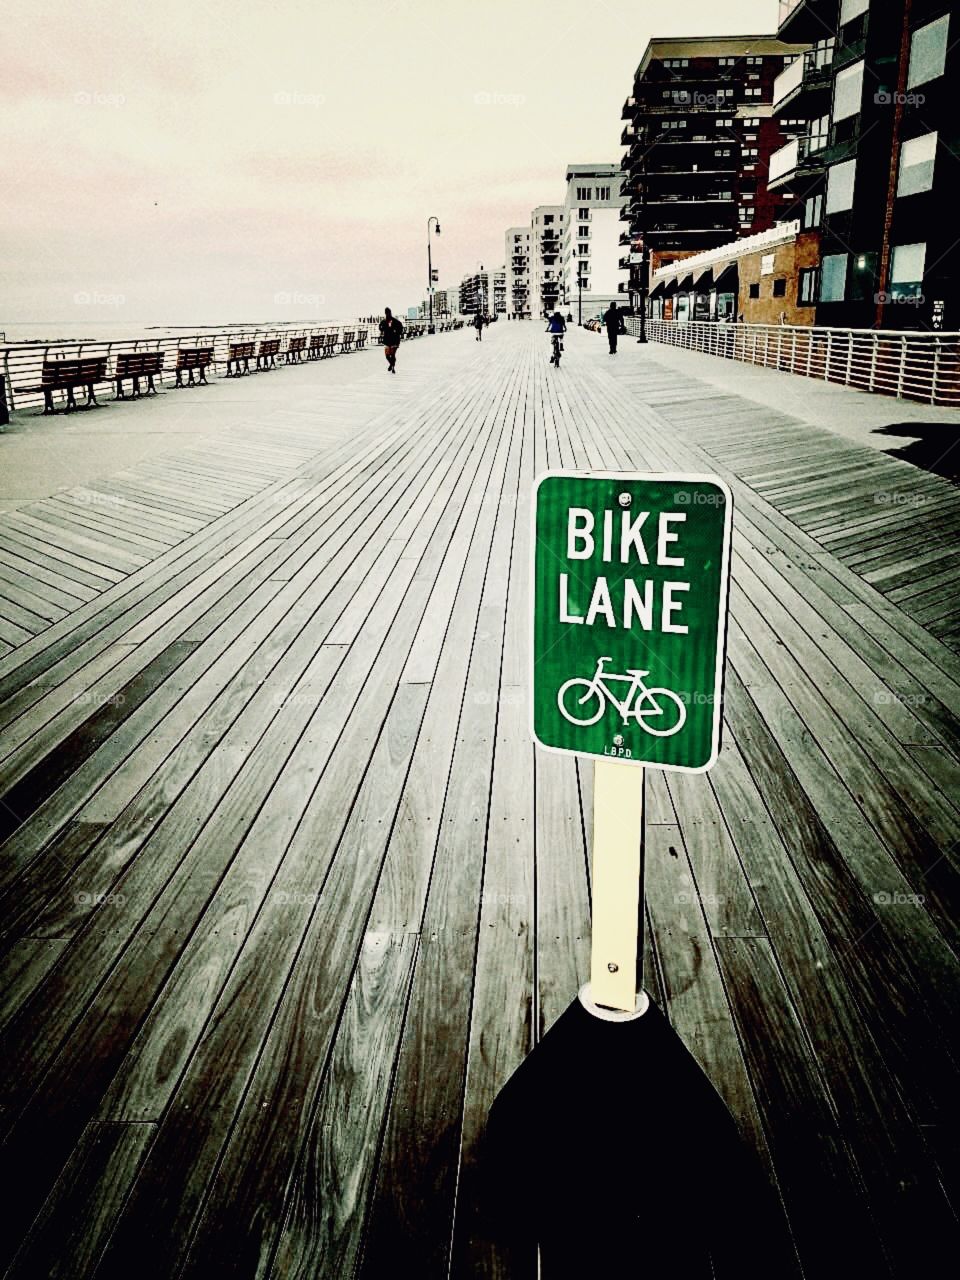 Bike lane 